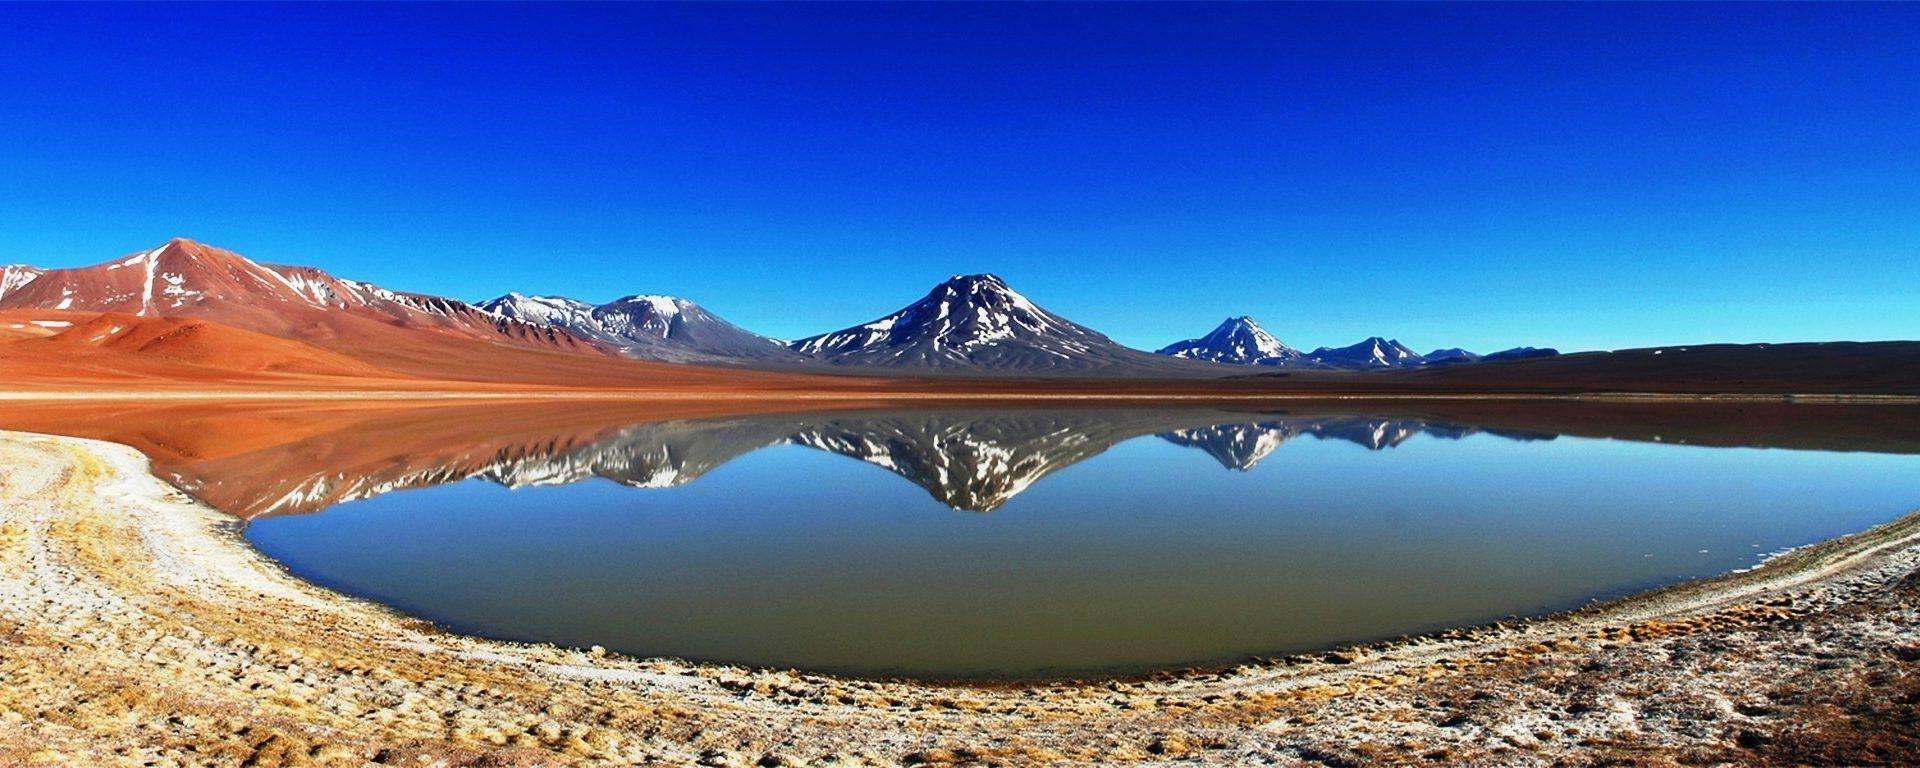 Lakes: Lejia Mountains Andes Desert Reflection Atacama Peaks Morning